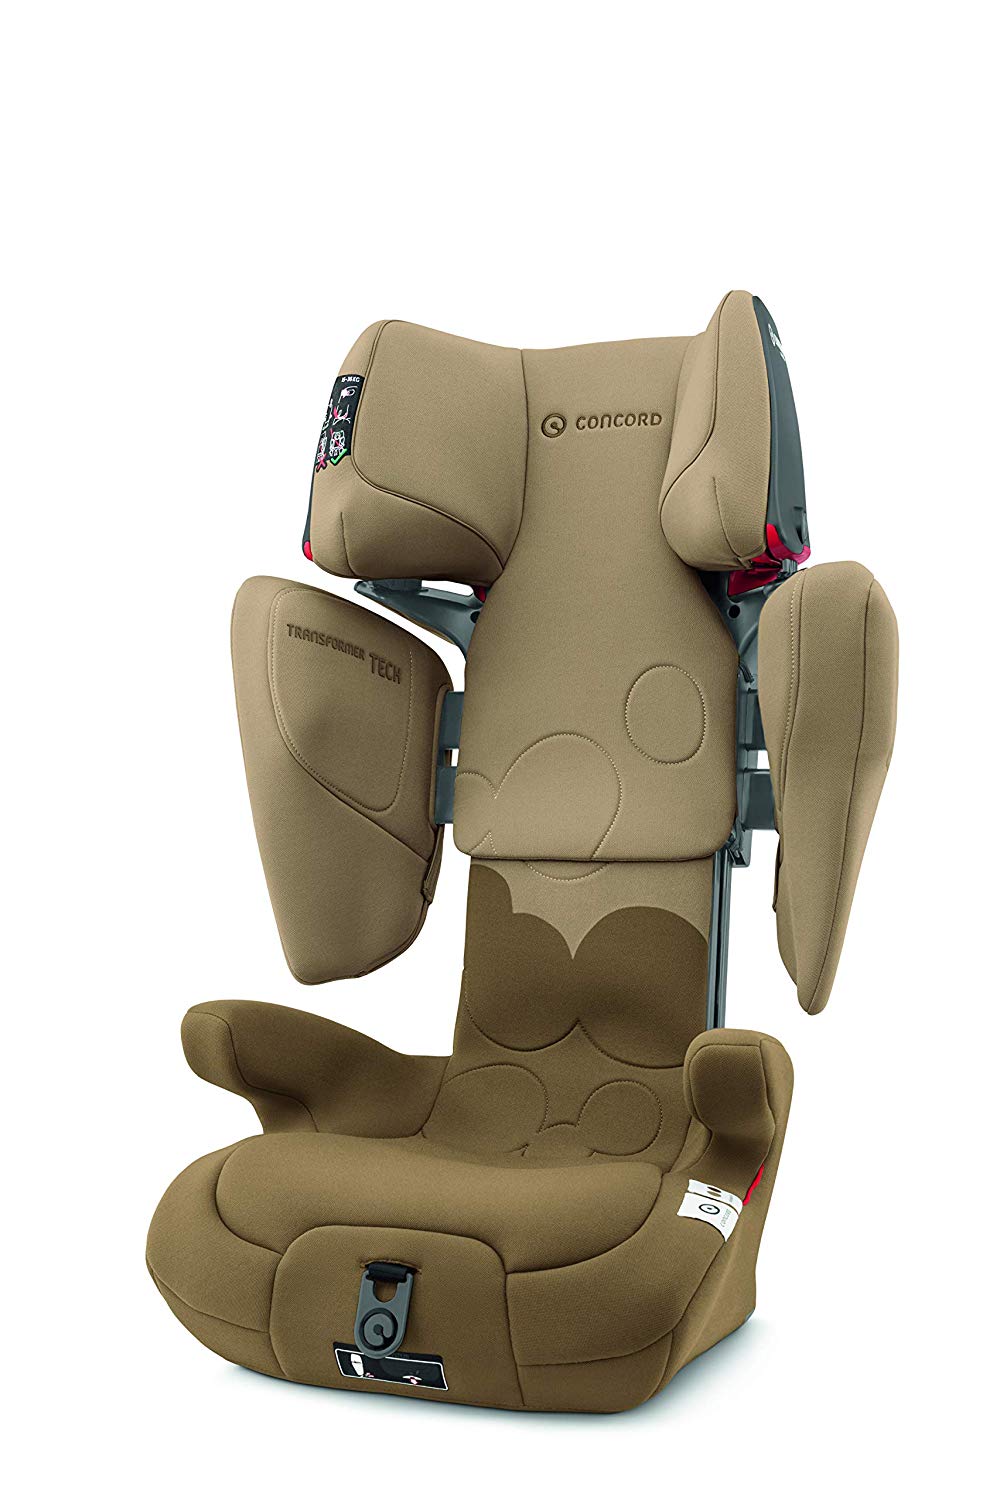 Concord Transformer Tech Child Car Seat Group 2/3